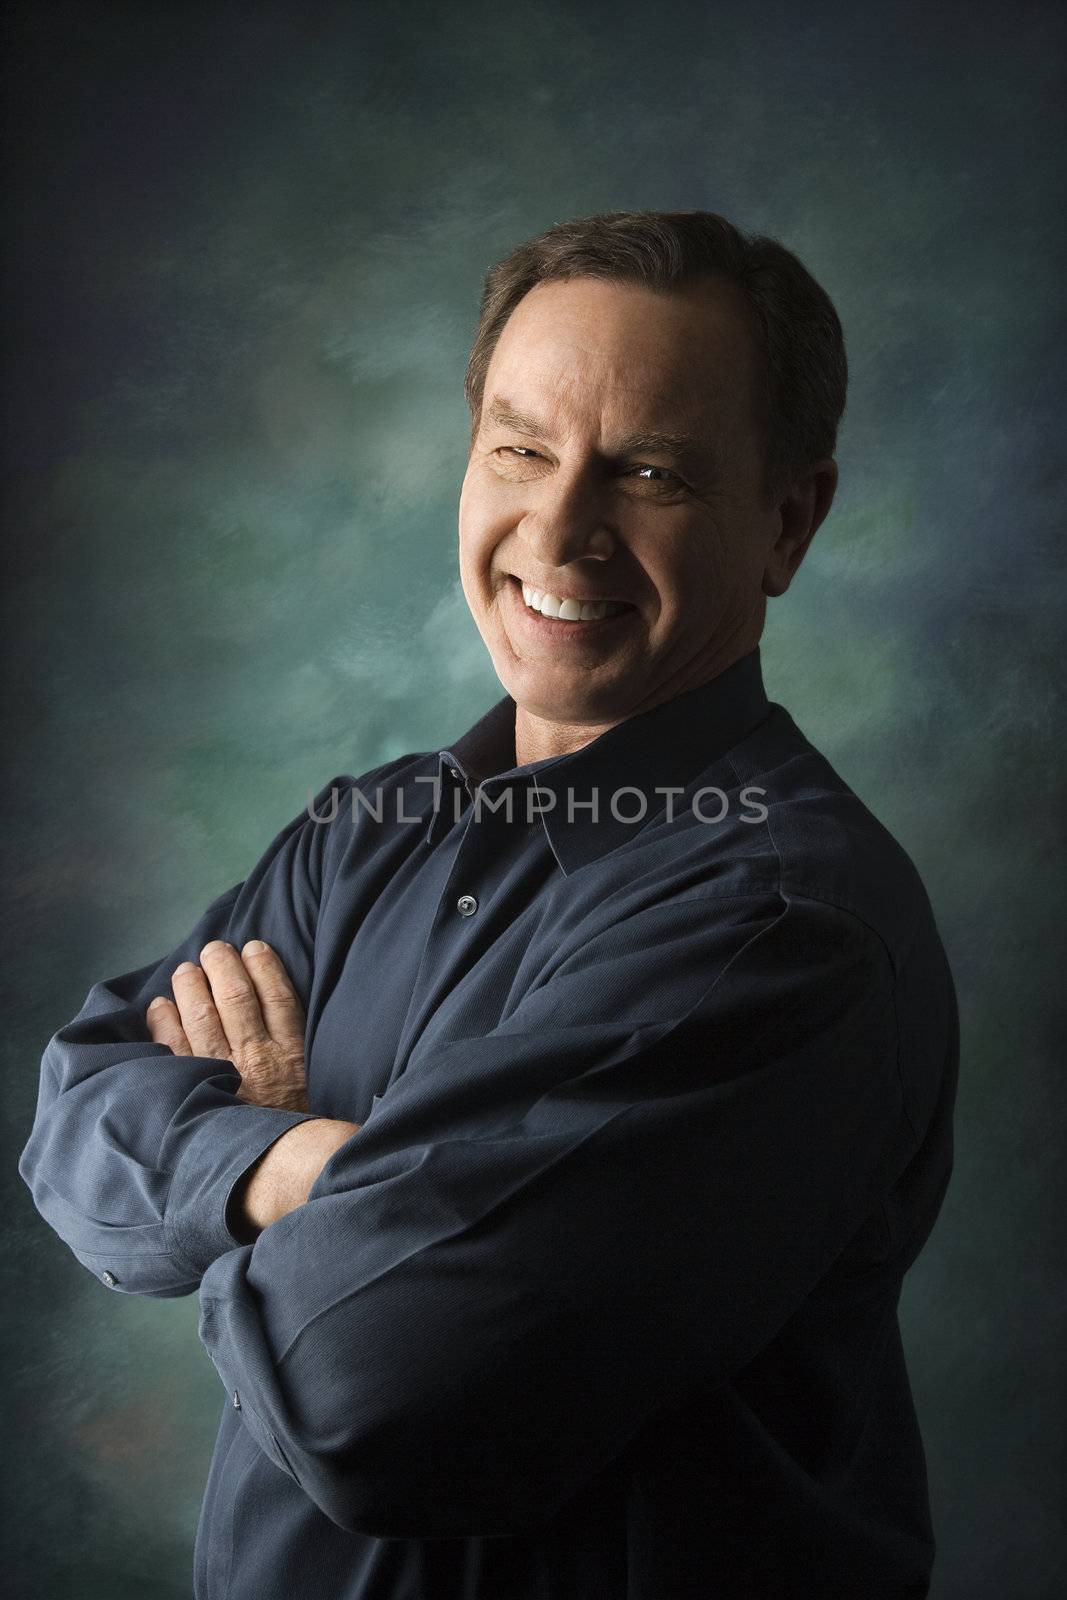 Smiling man portrait. by iofoto